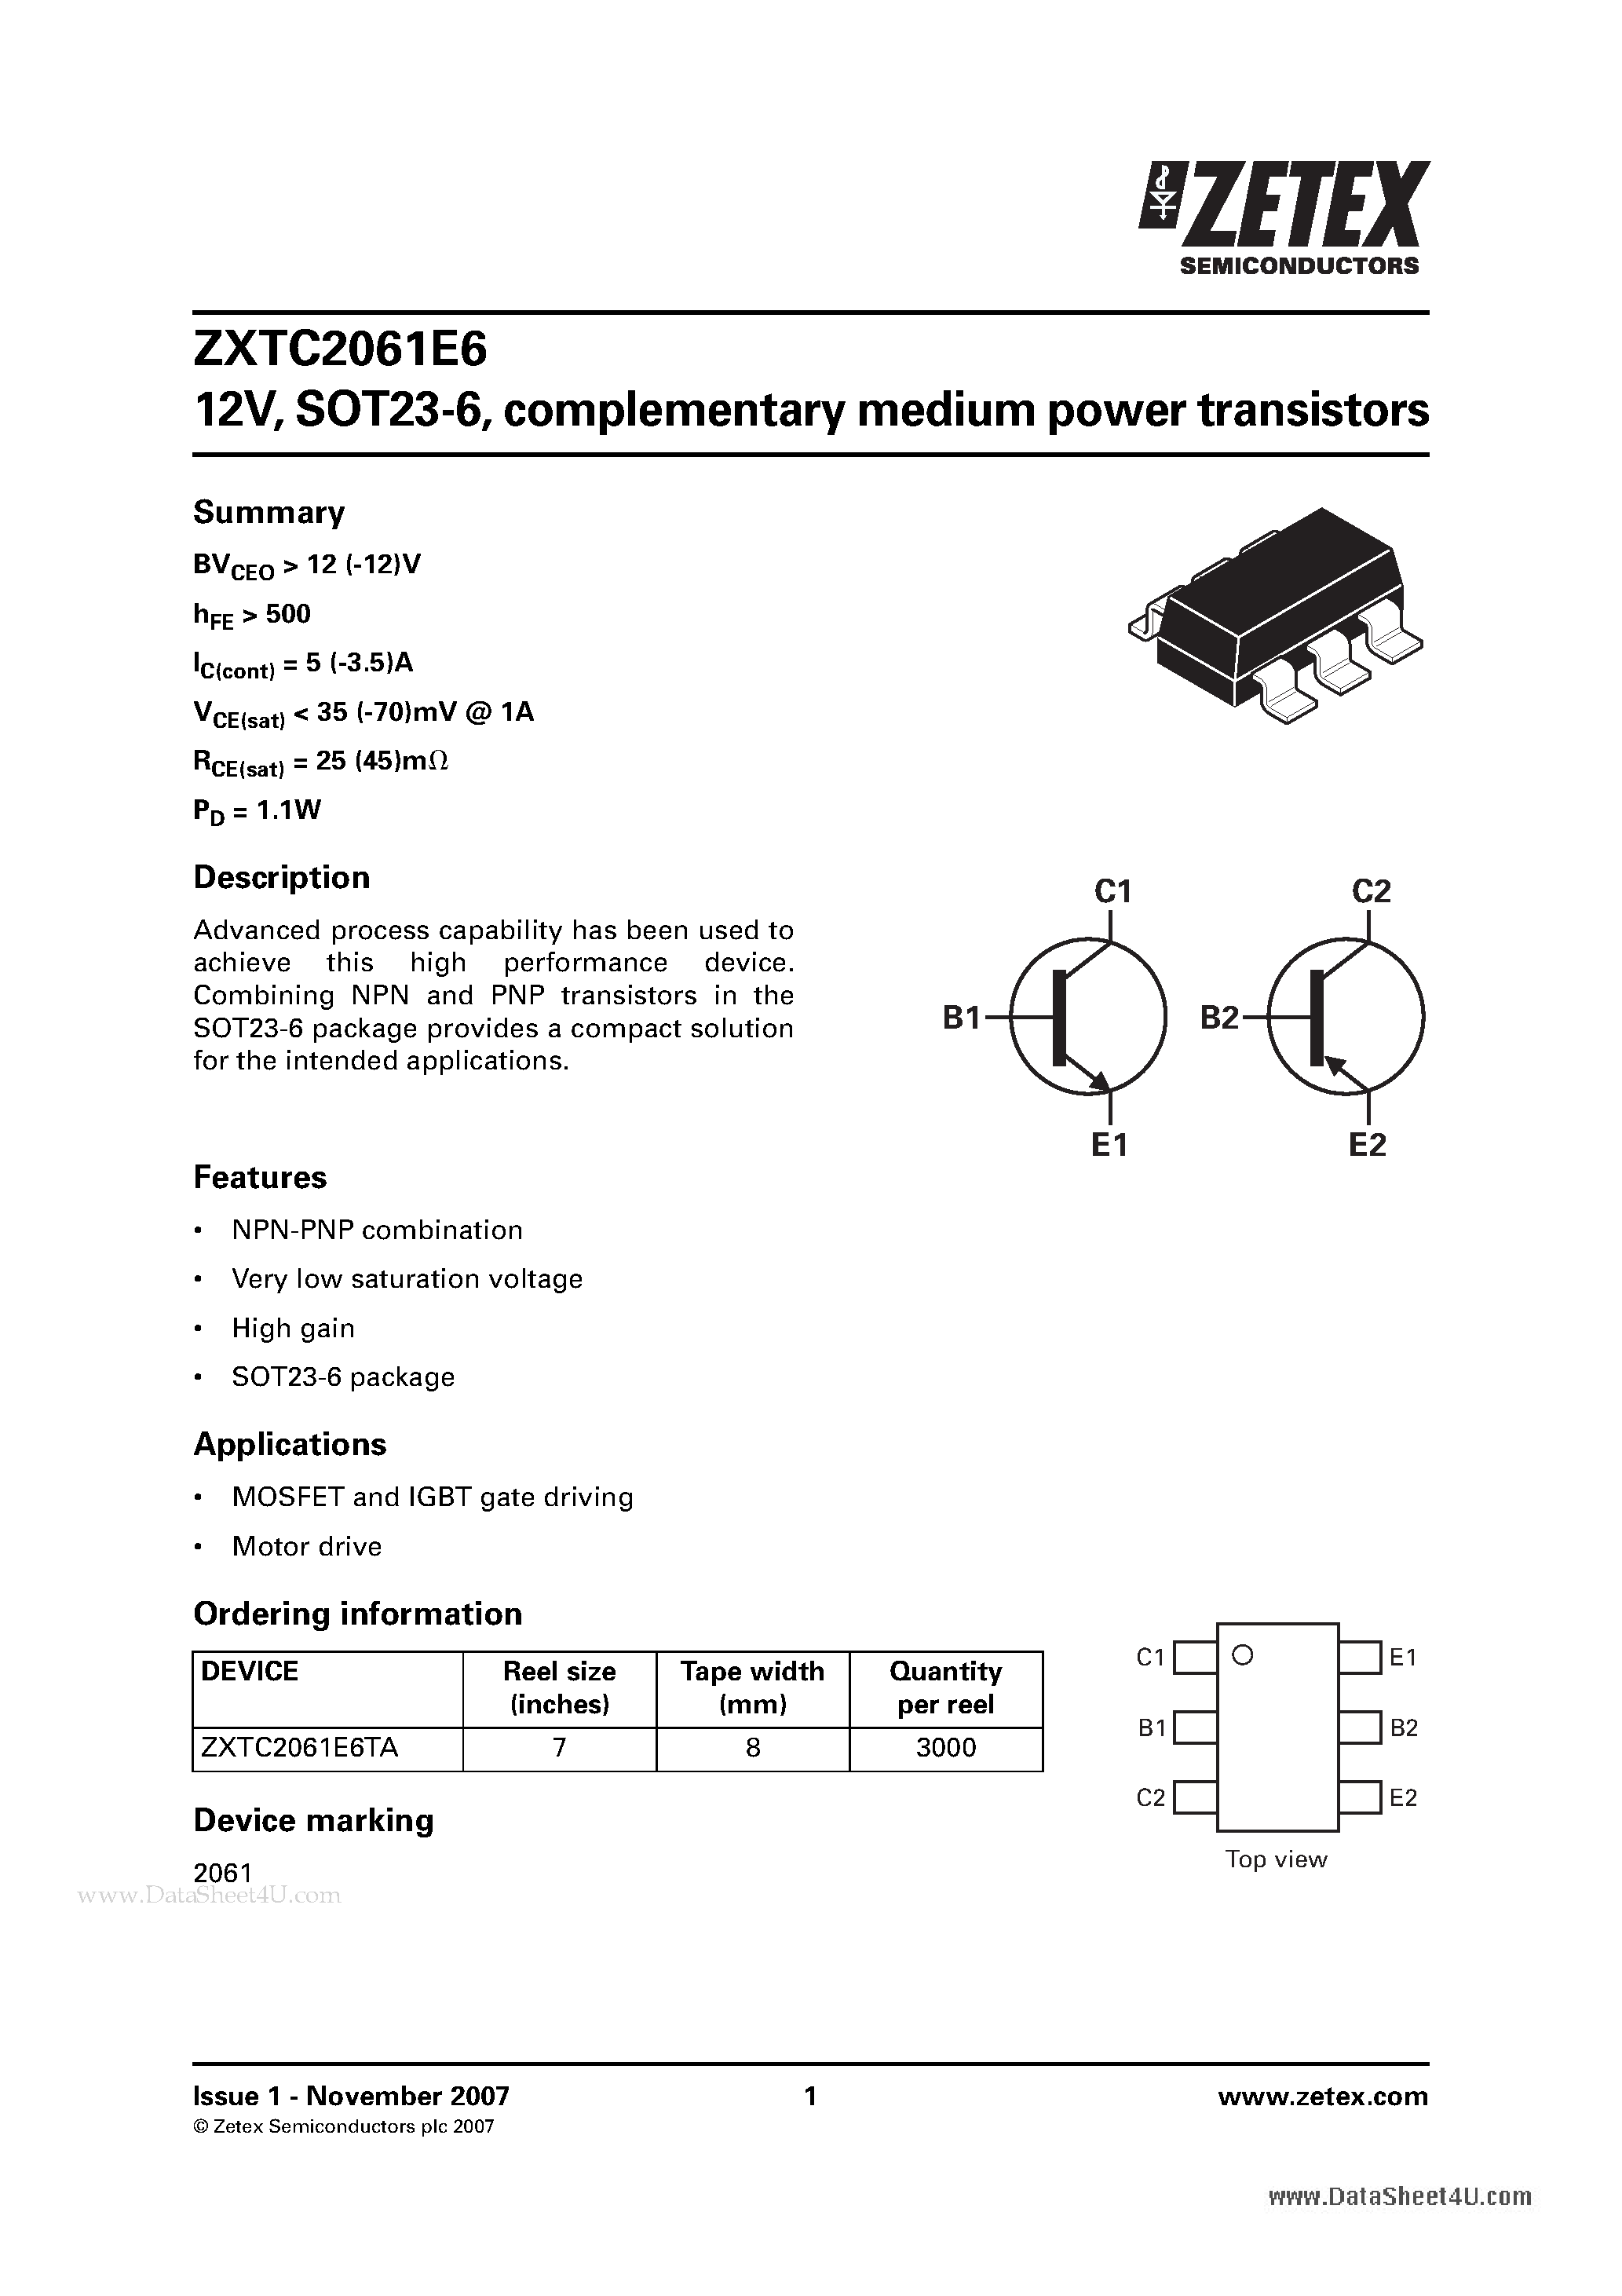 Datasheet ZXTC2061E6 - 12V SOT23-6 complementary medium power transistors page 1